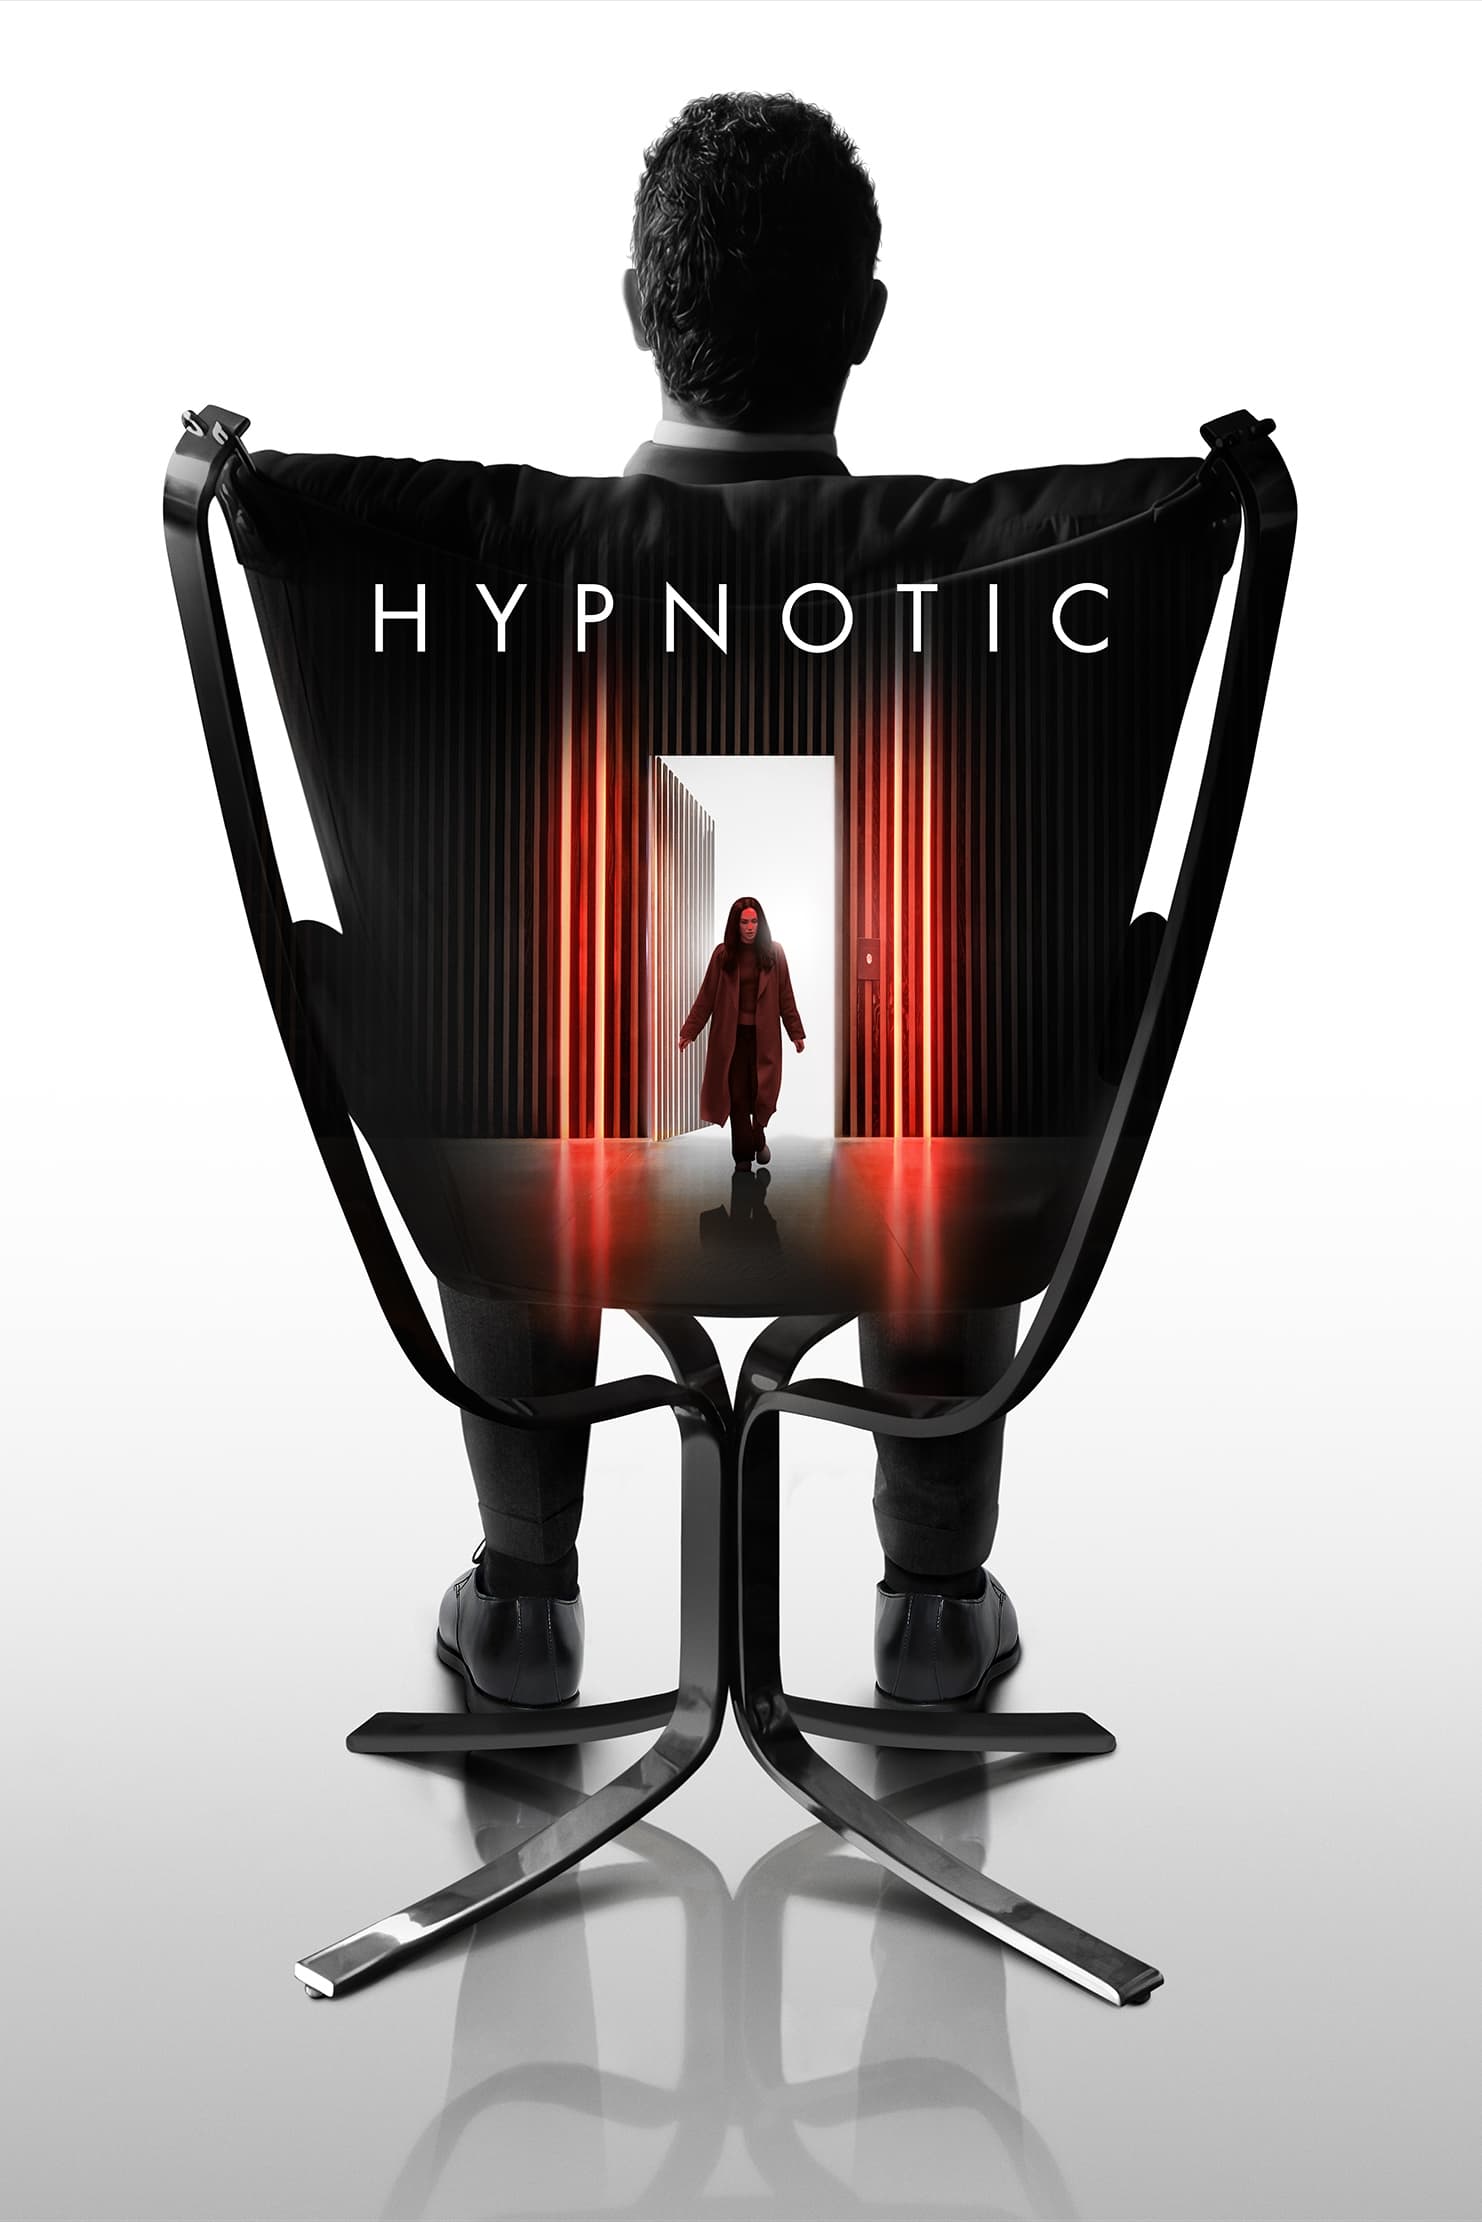 Caratula de Hypnotic (Hipnótico) 